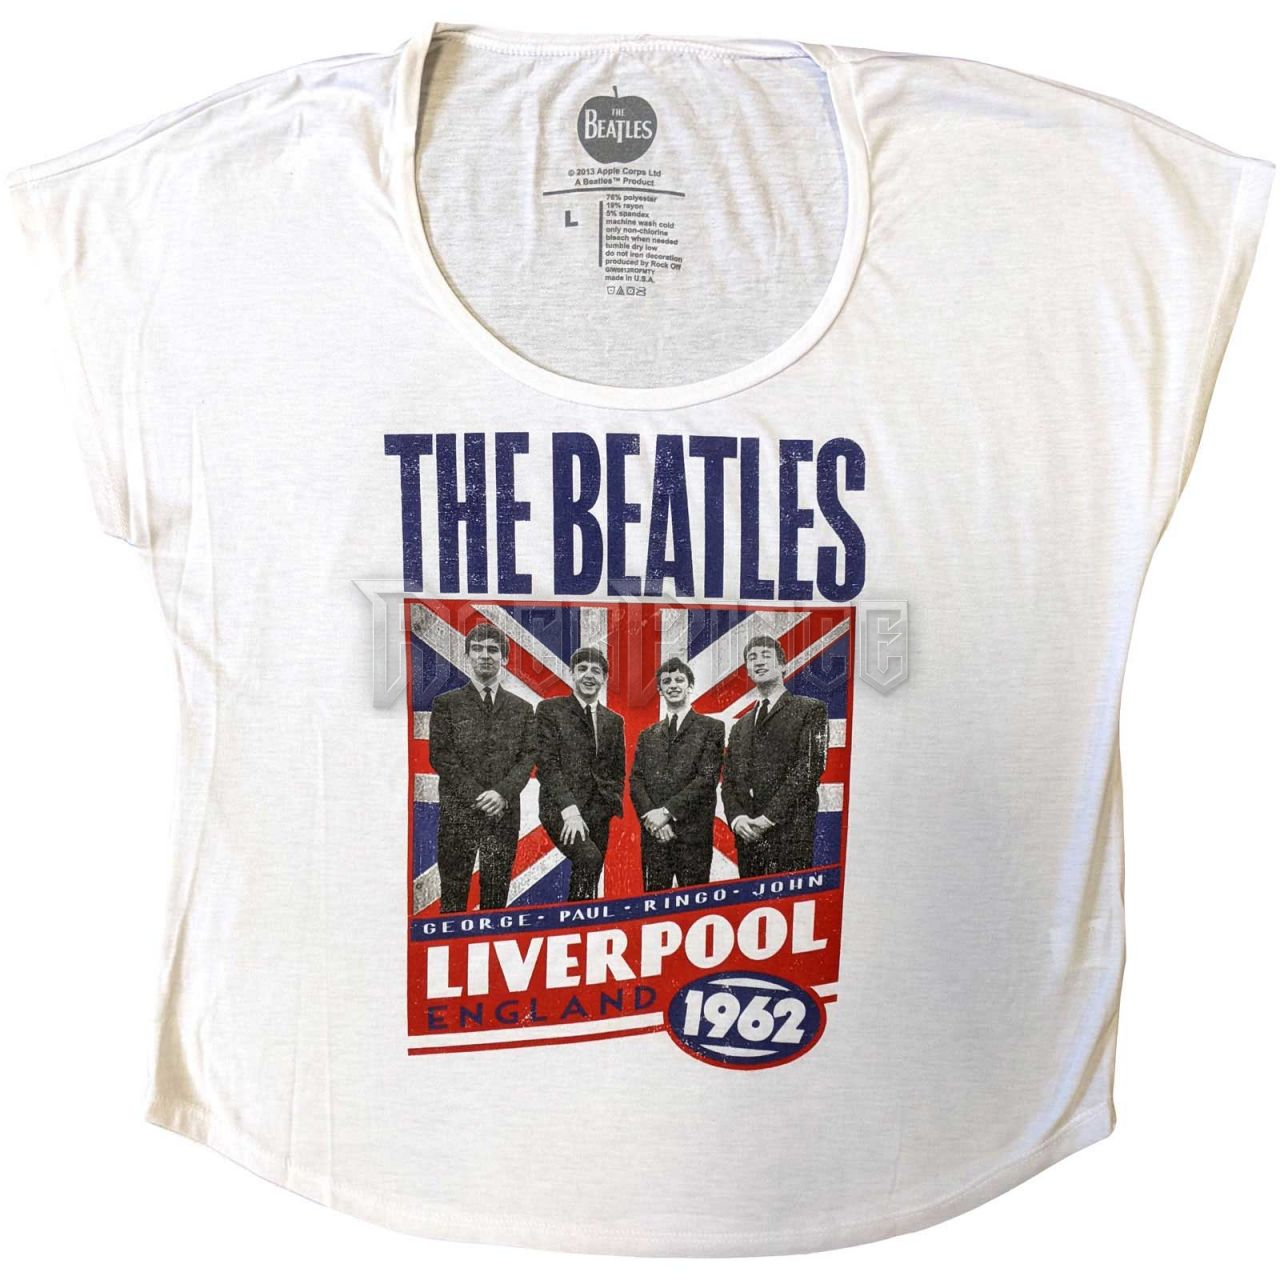 The Beatles - Liverpool England 1962 - női póló - BEATTEE104LWDM